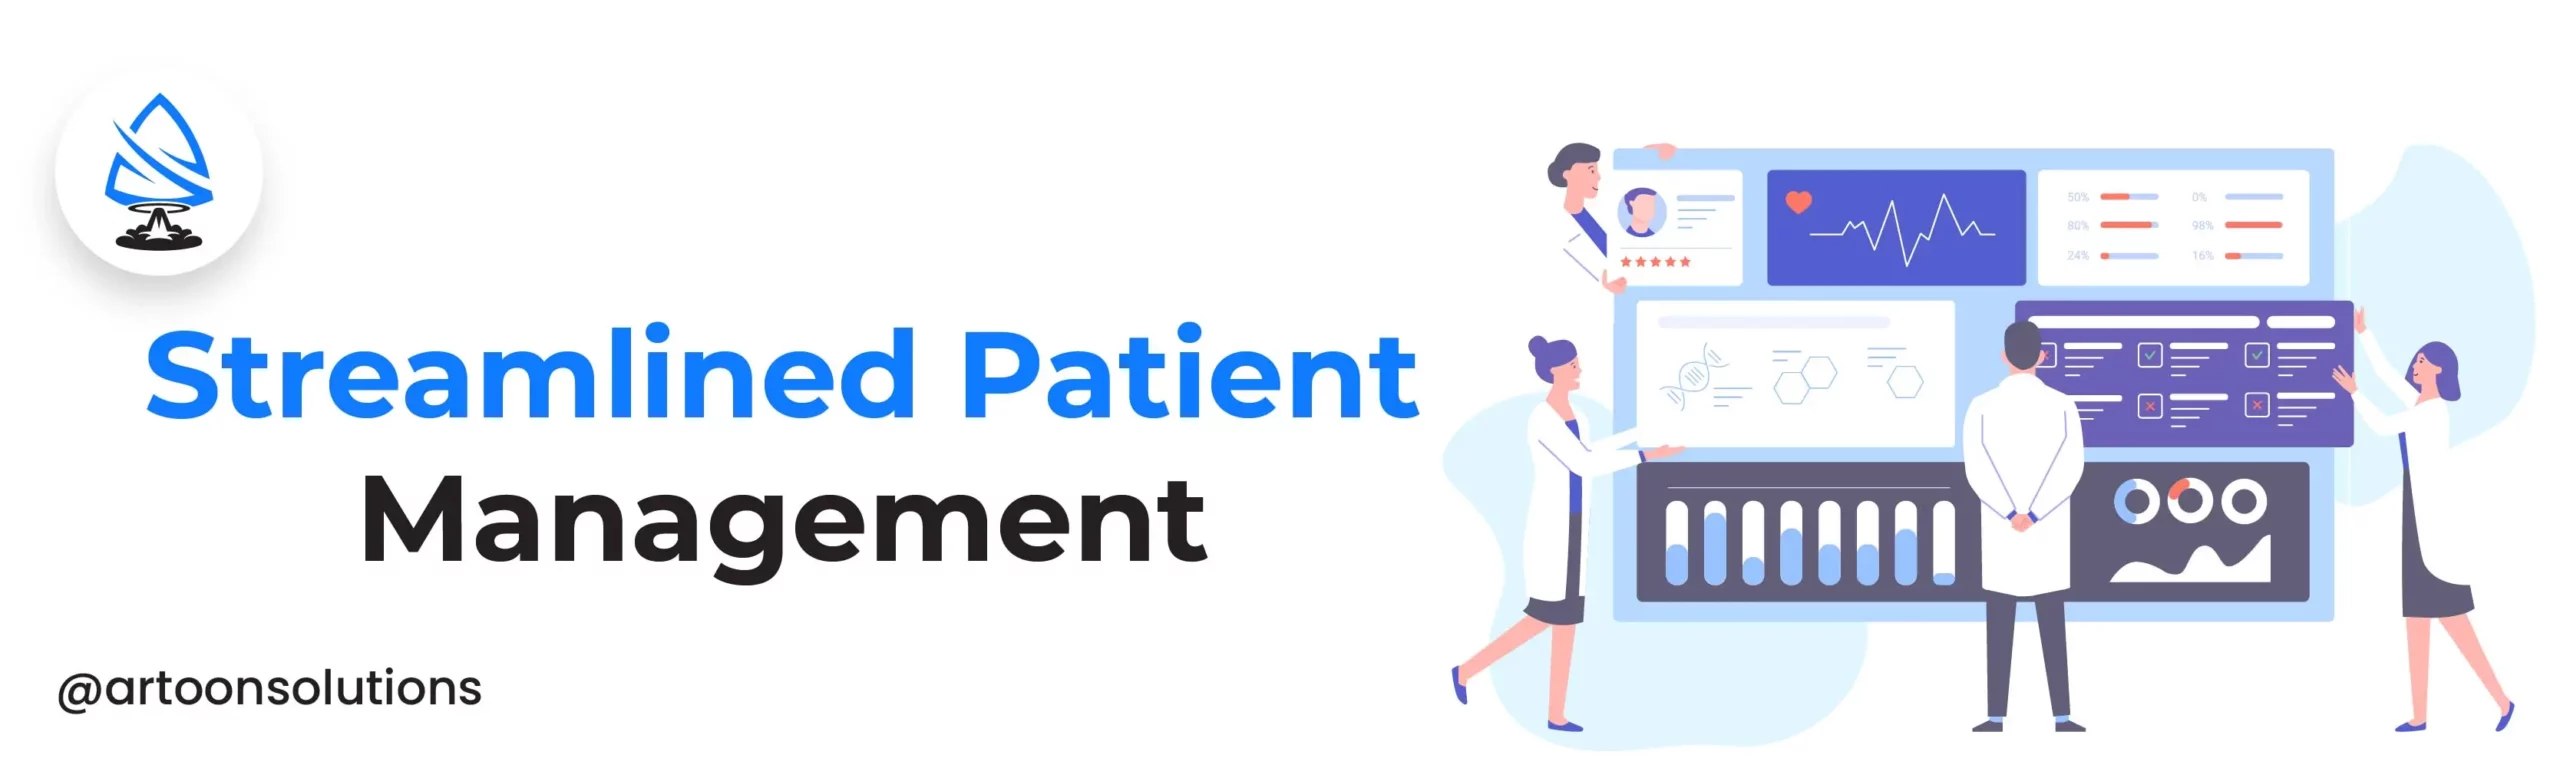 Streamlined Patient Management